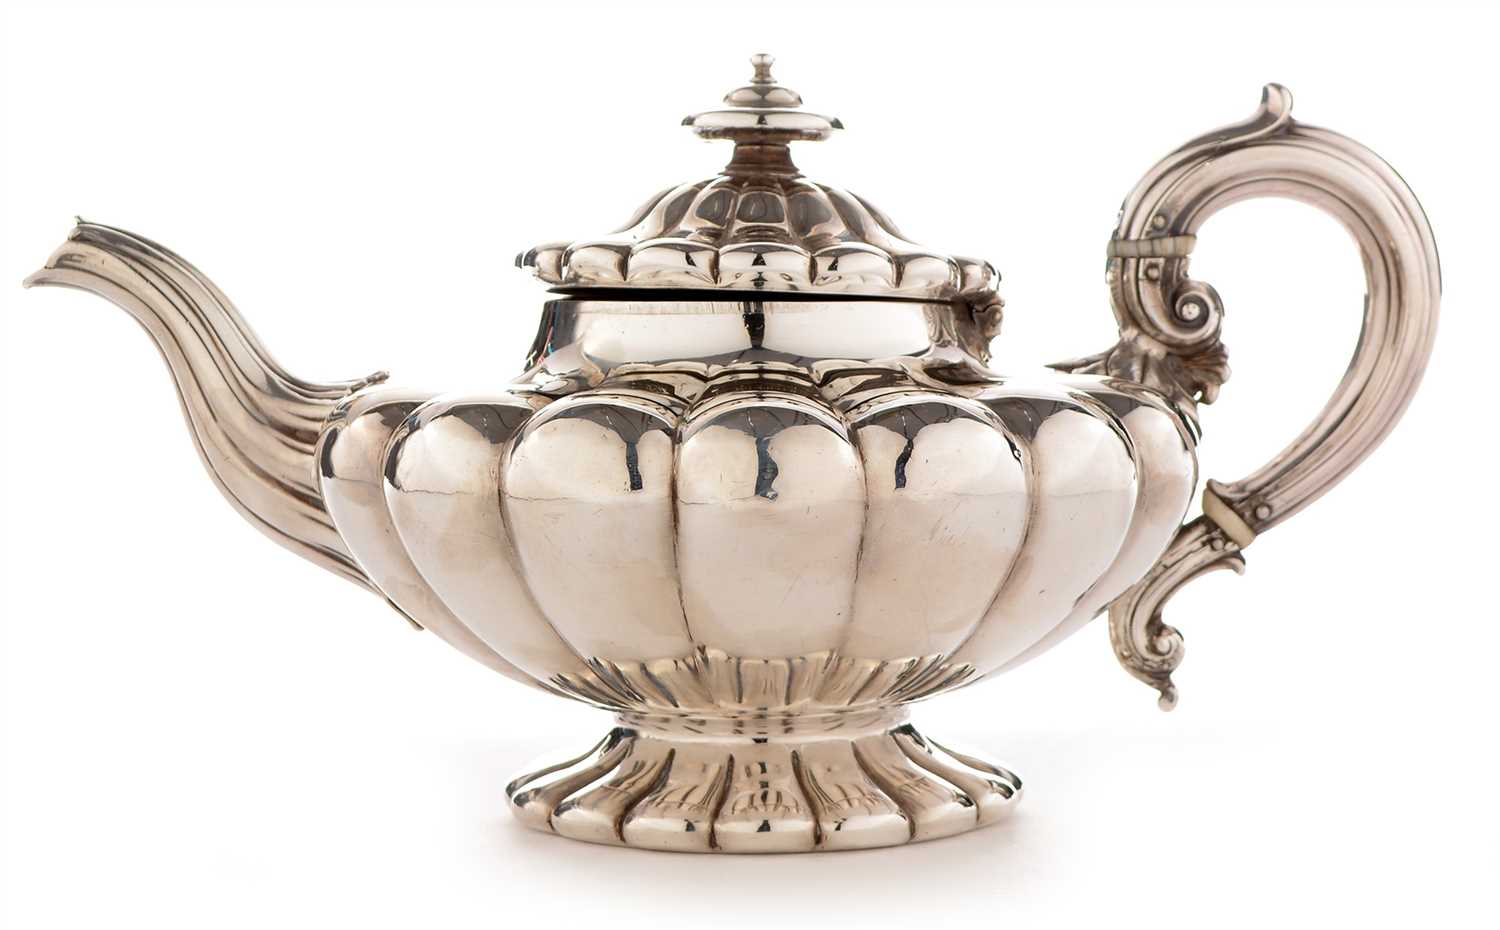 Lot 215 - A William IV teapot